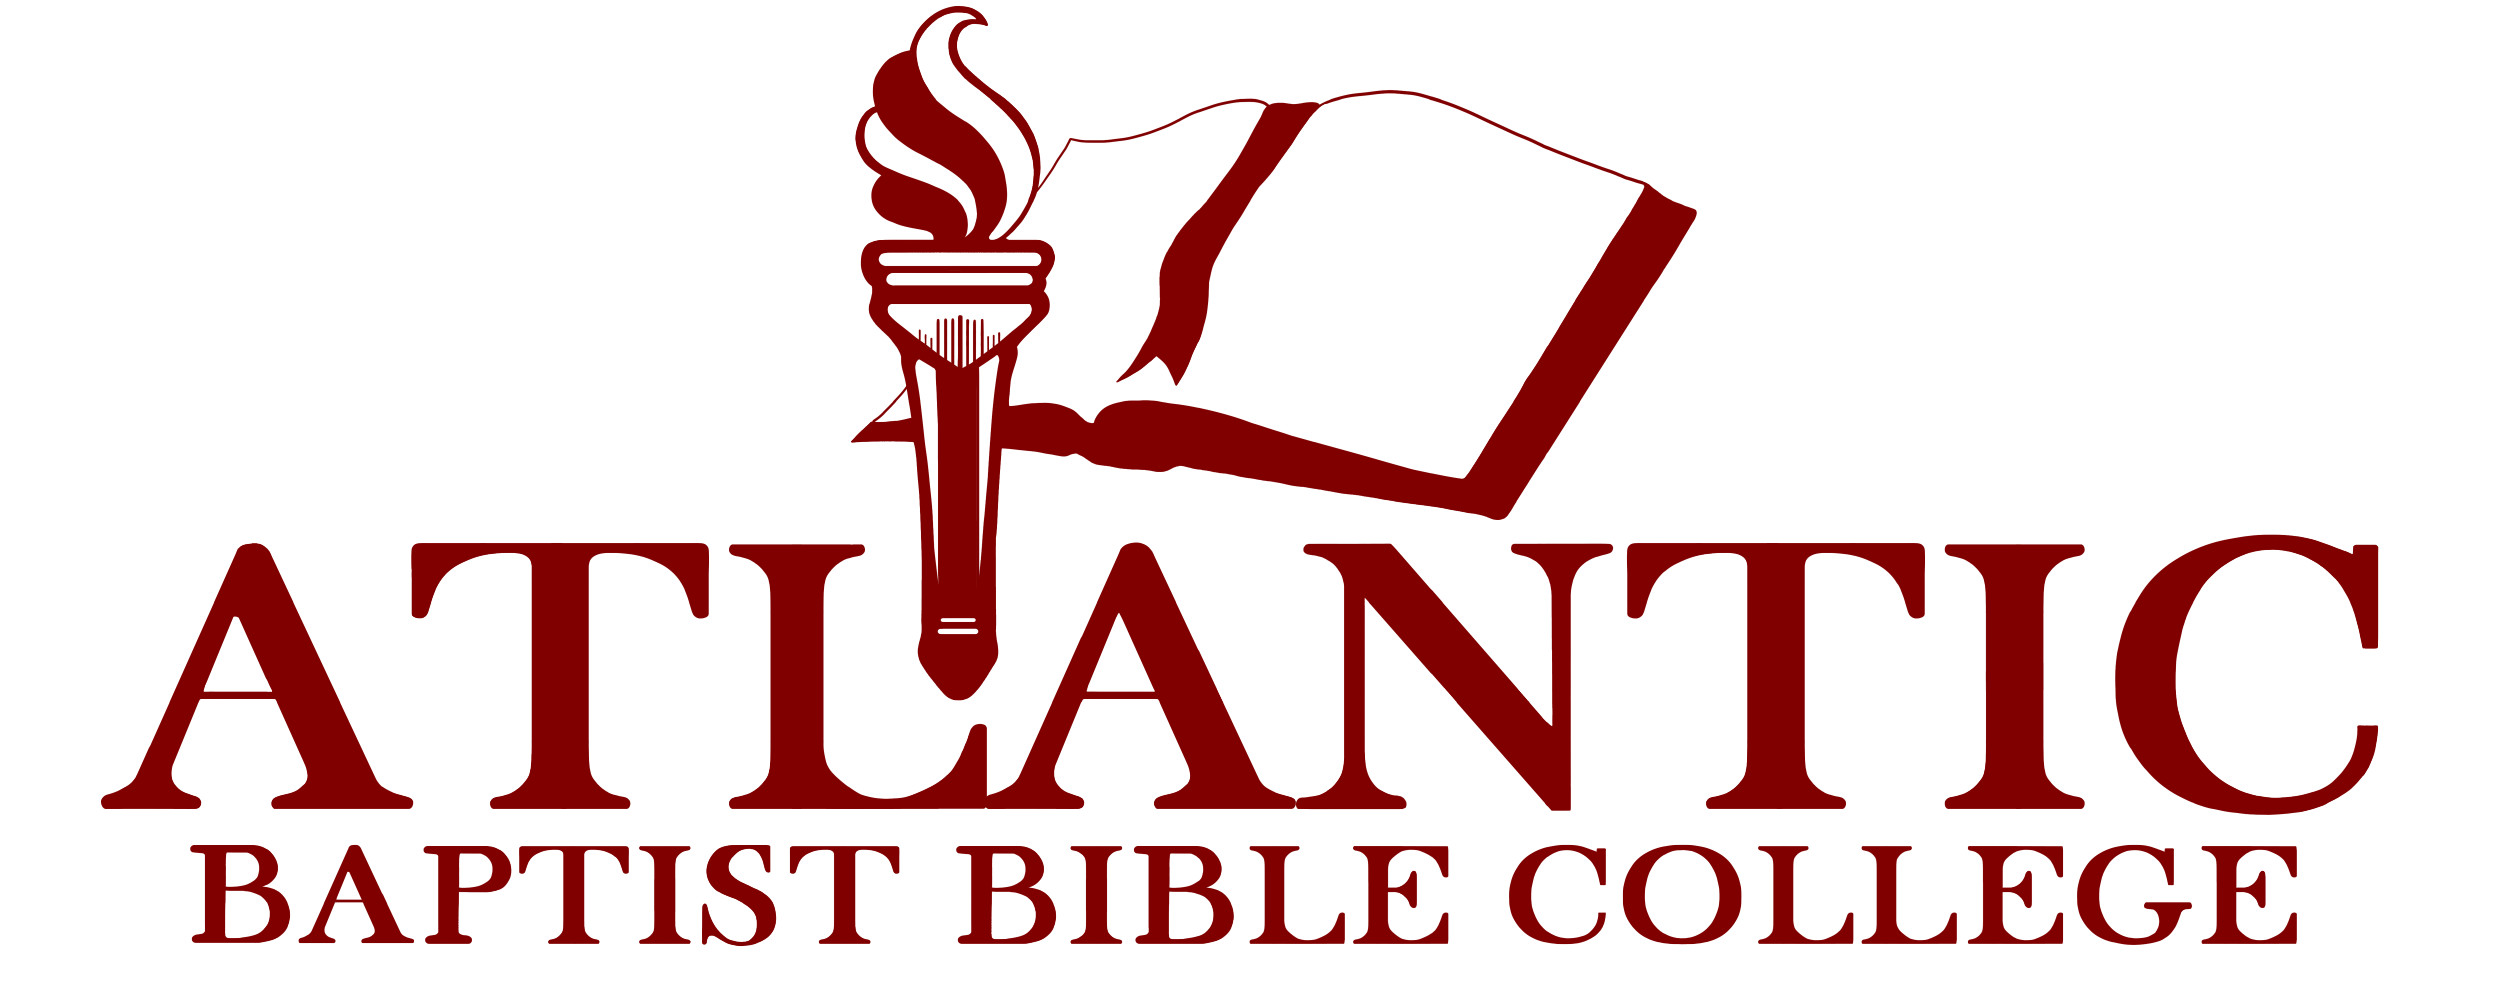 Atlantic Baptist Bible College